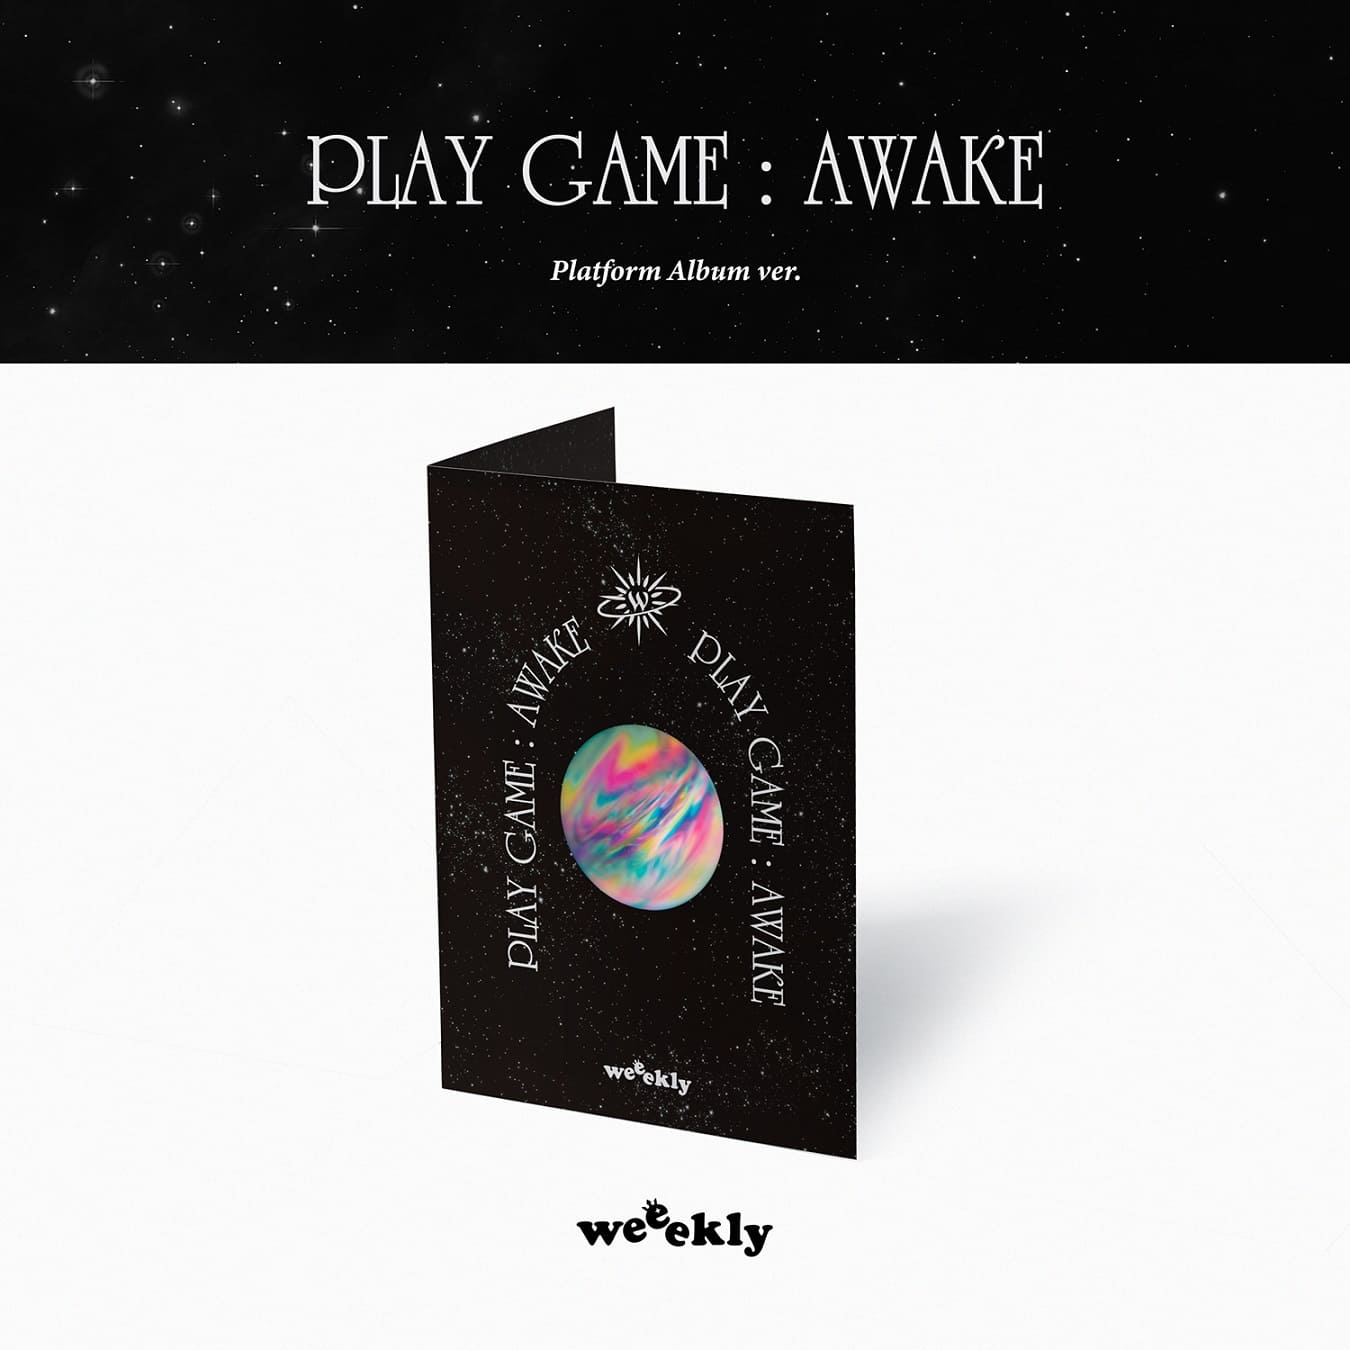 Weeekly 1st Single [Play Game : AWAKE] (Platform Album ver.) 🇰🇷